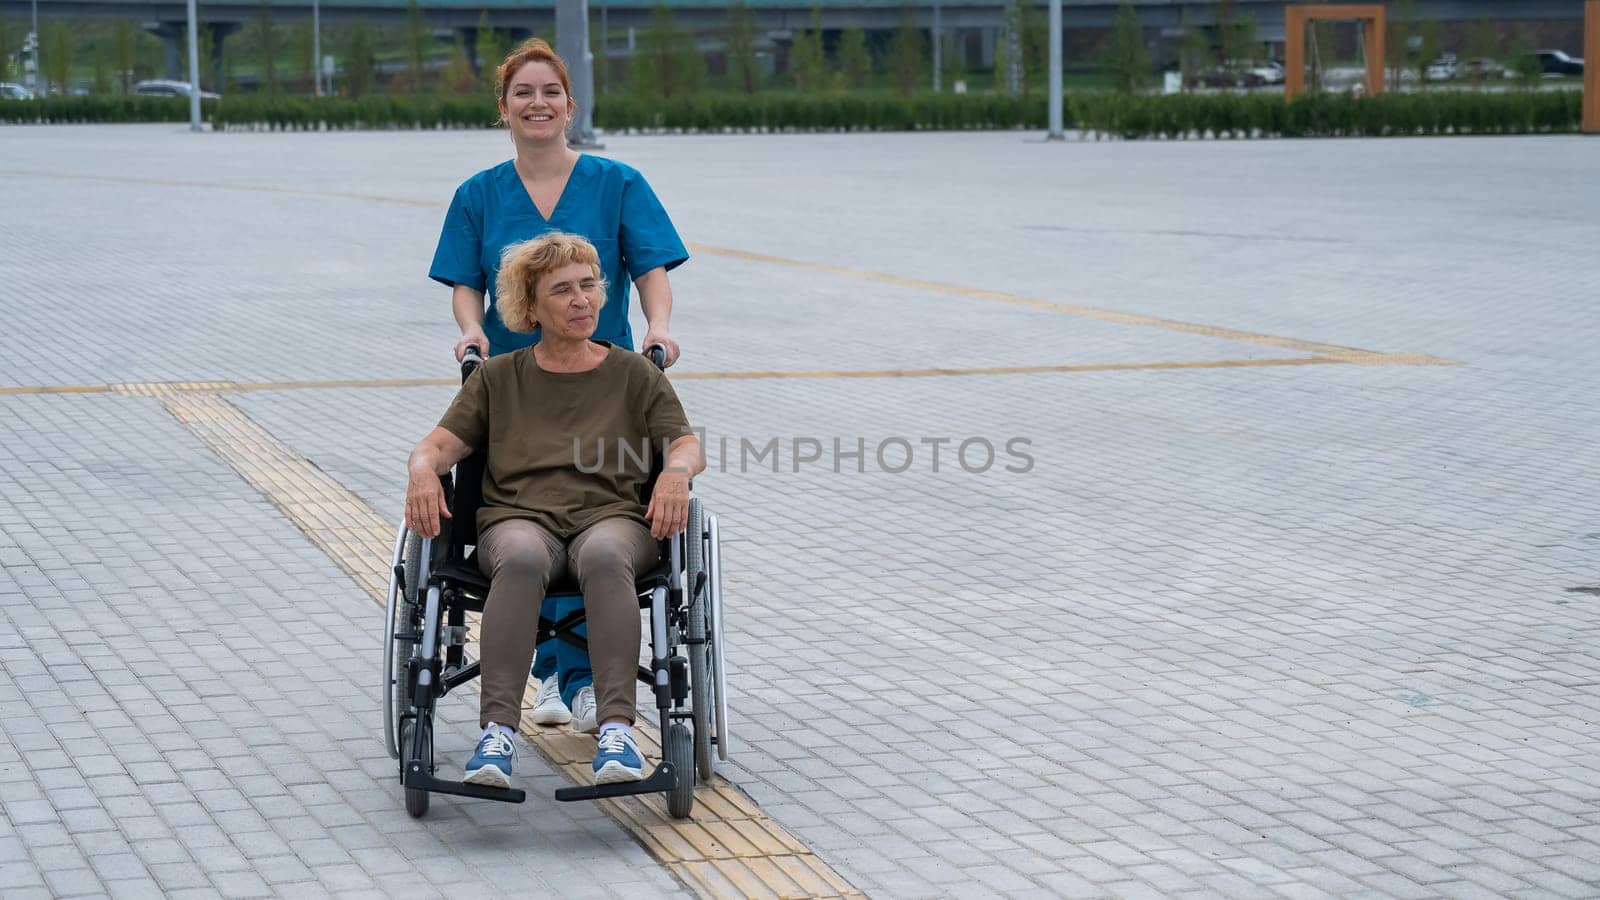 Caucasian nurse pushing elderly woman in wheelchair outdoors. by mrwed54